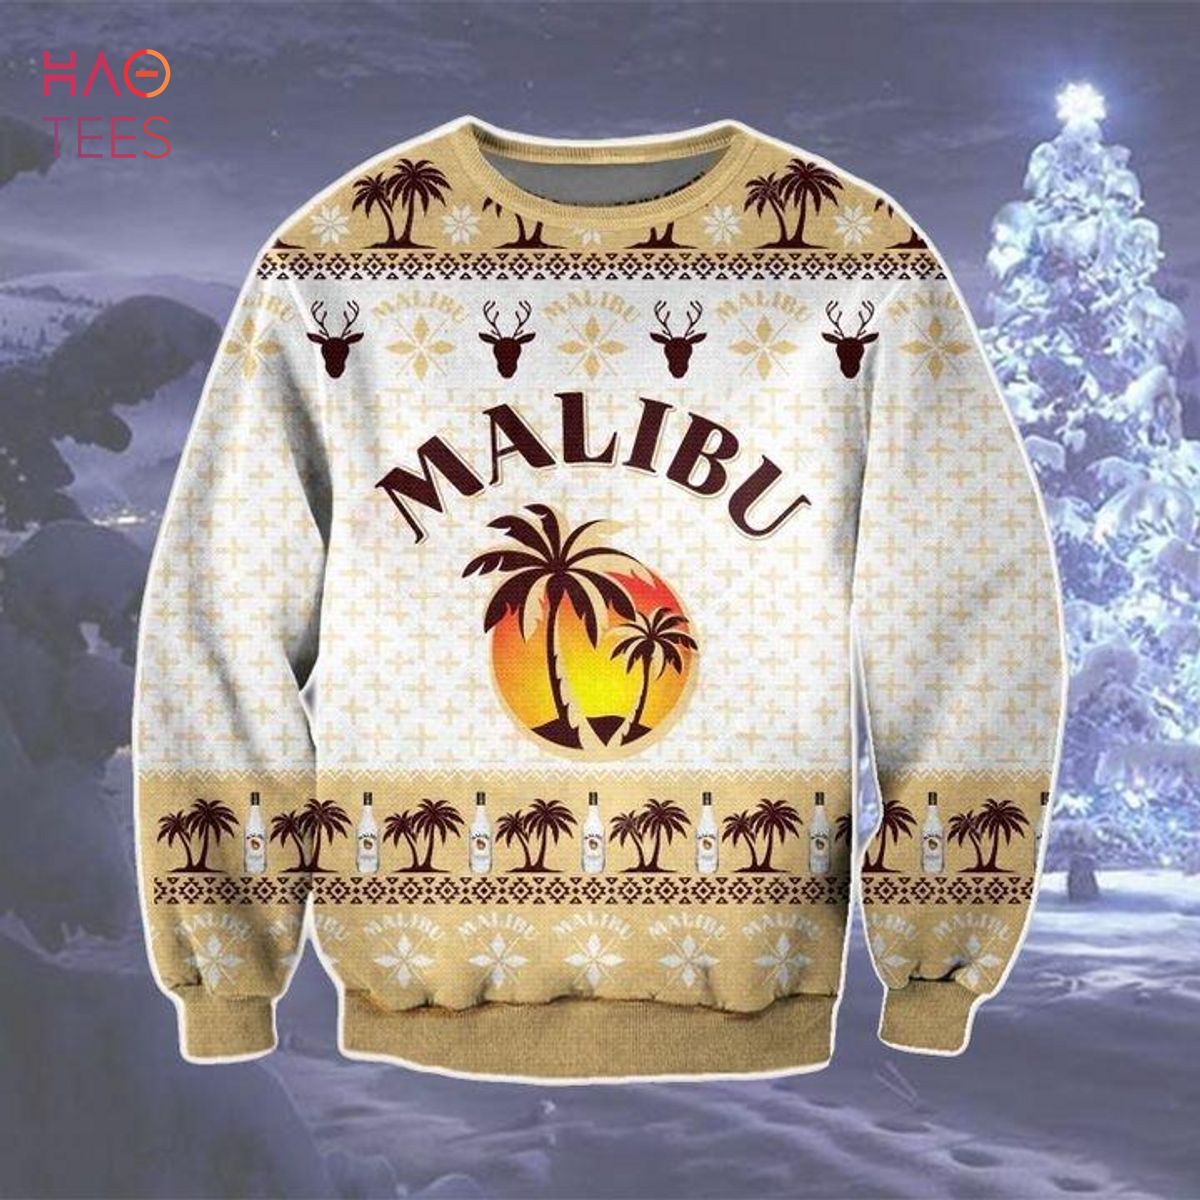 Malibu Ugly Christmas Sweater